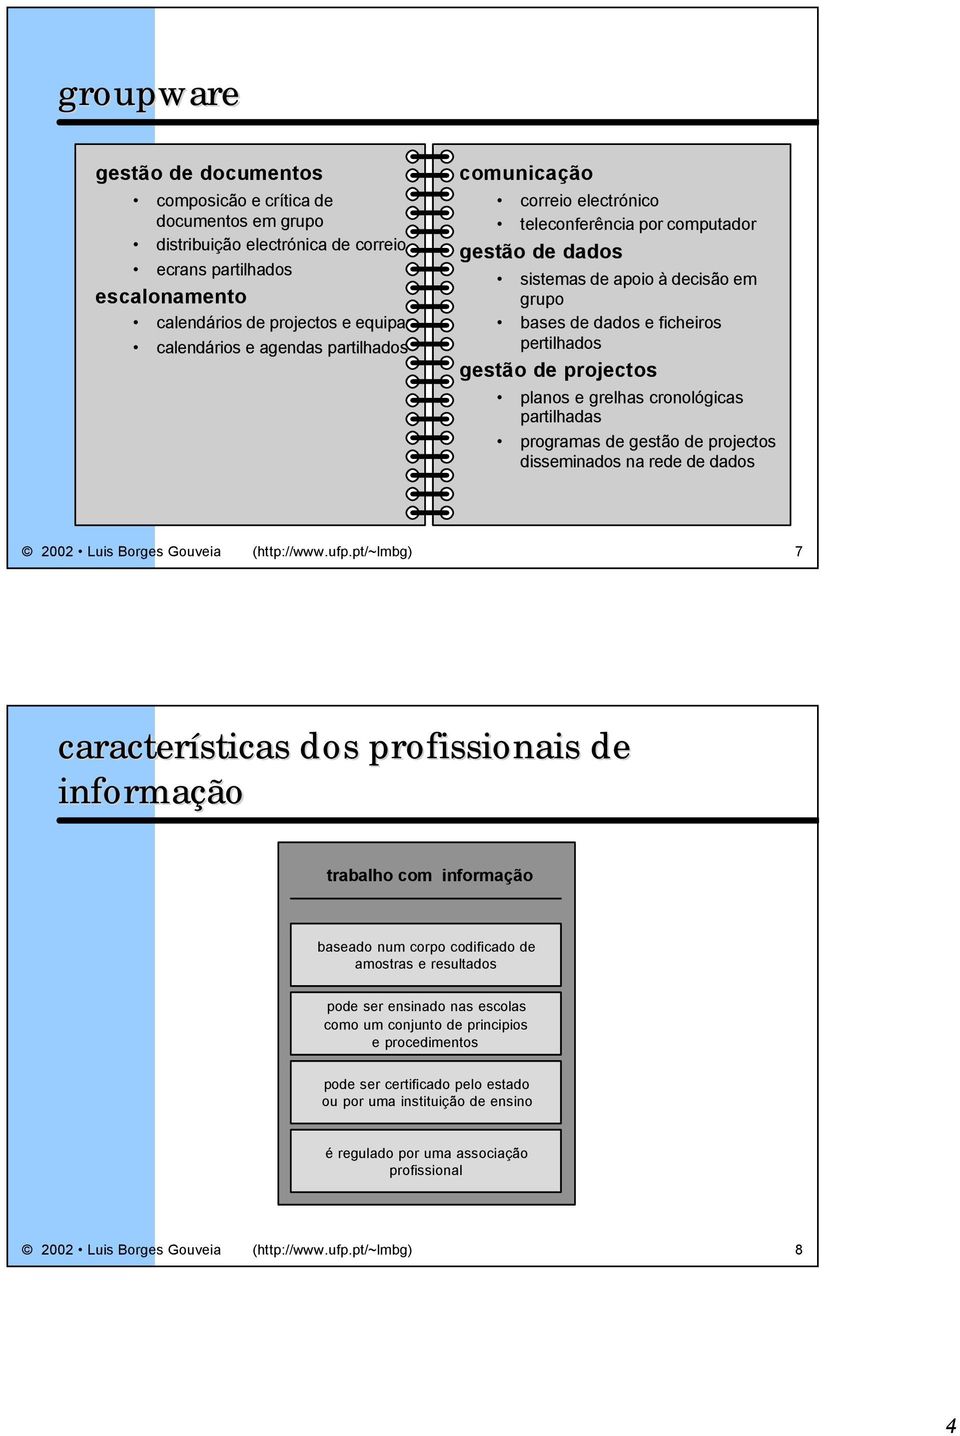 projectos disseminados na re dados 2002 Luis Borges Gouveia (http://www.ufp.